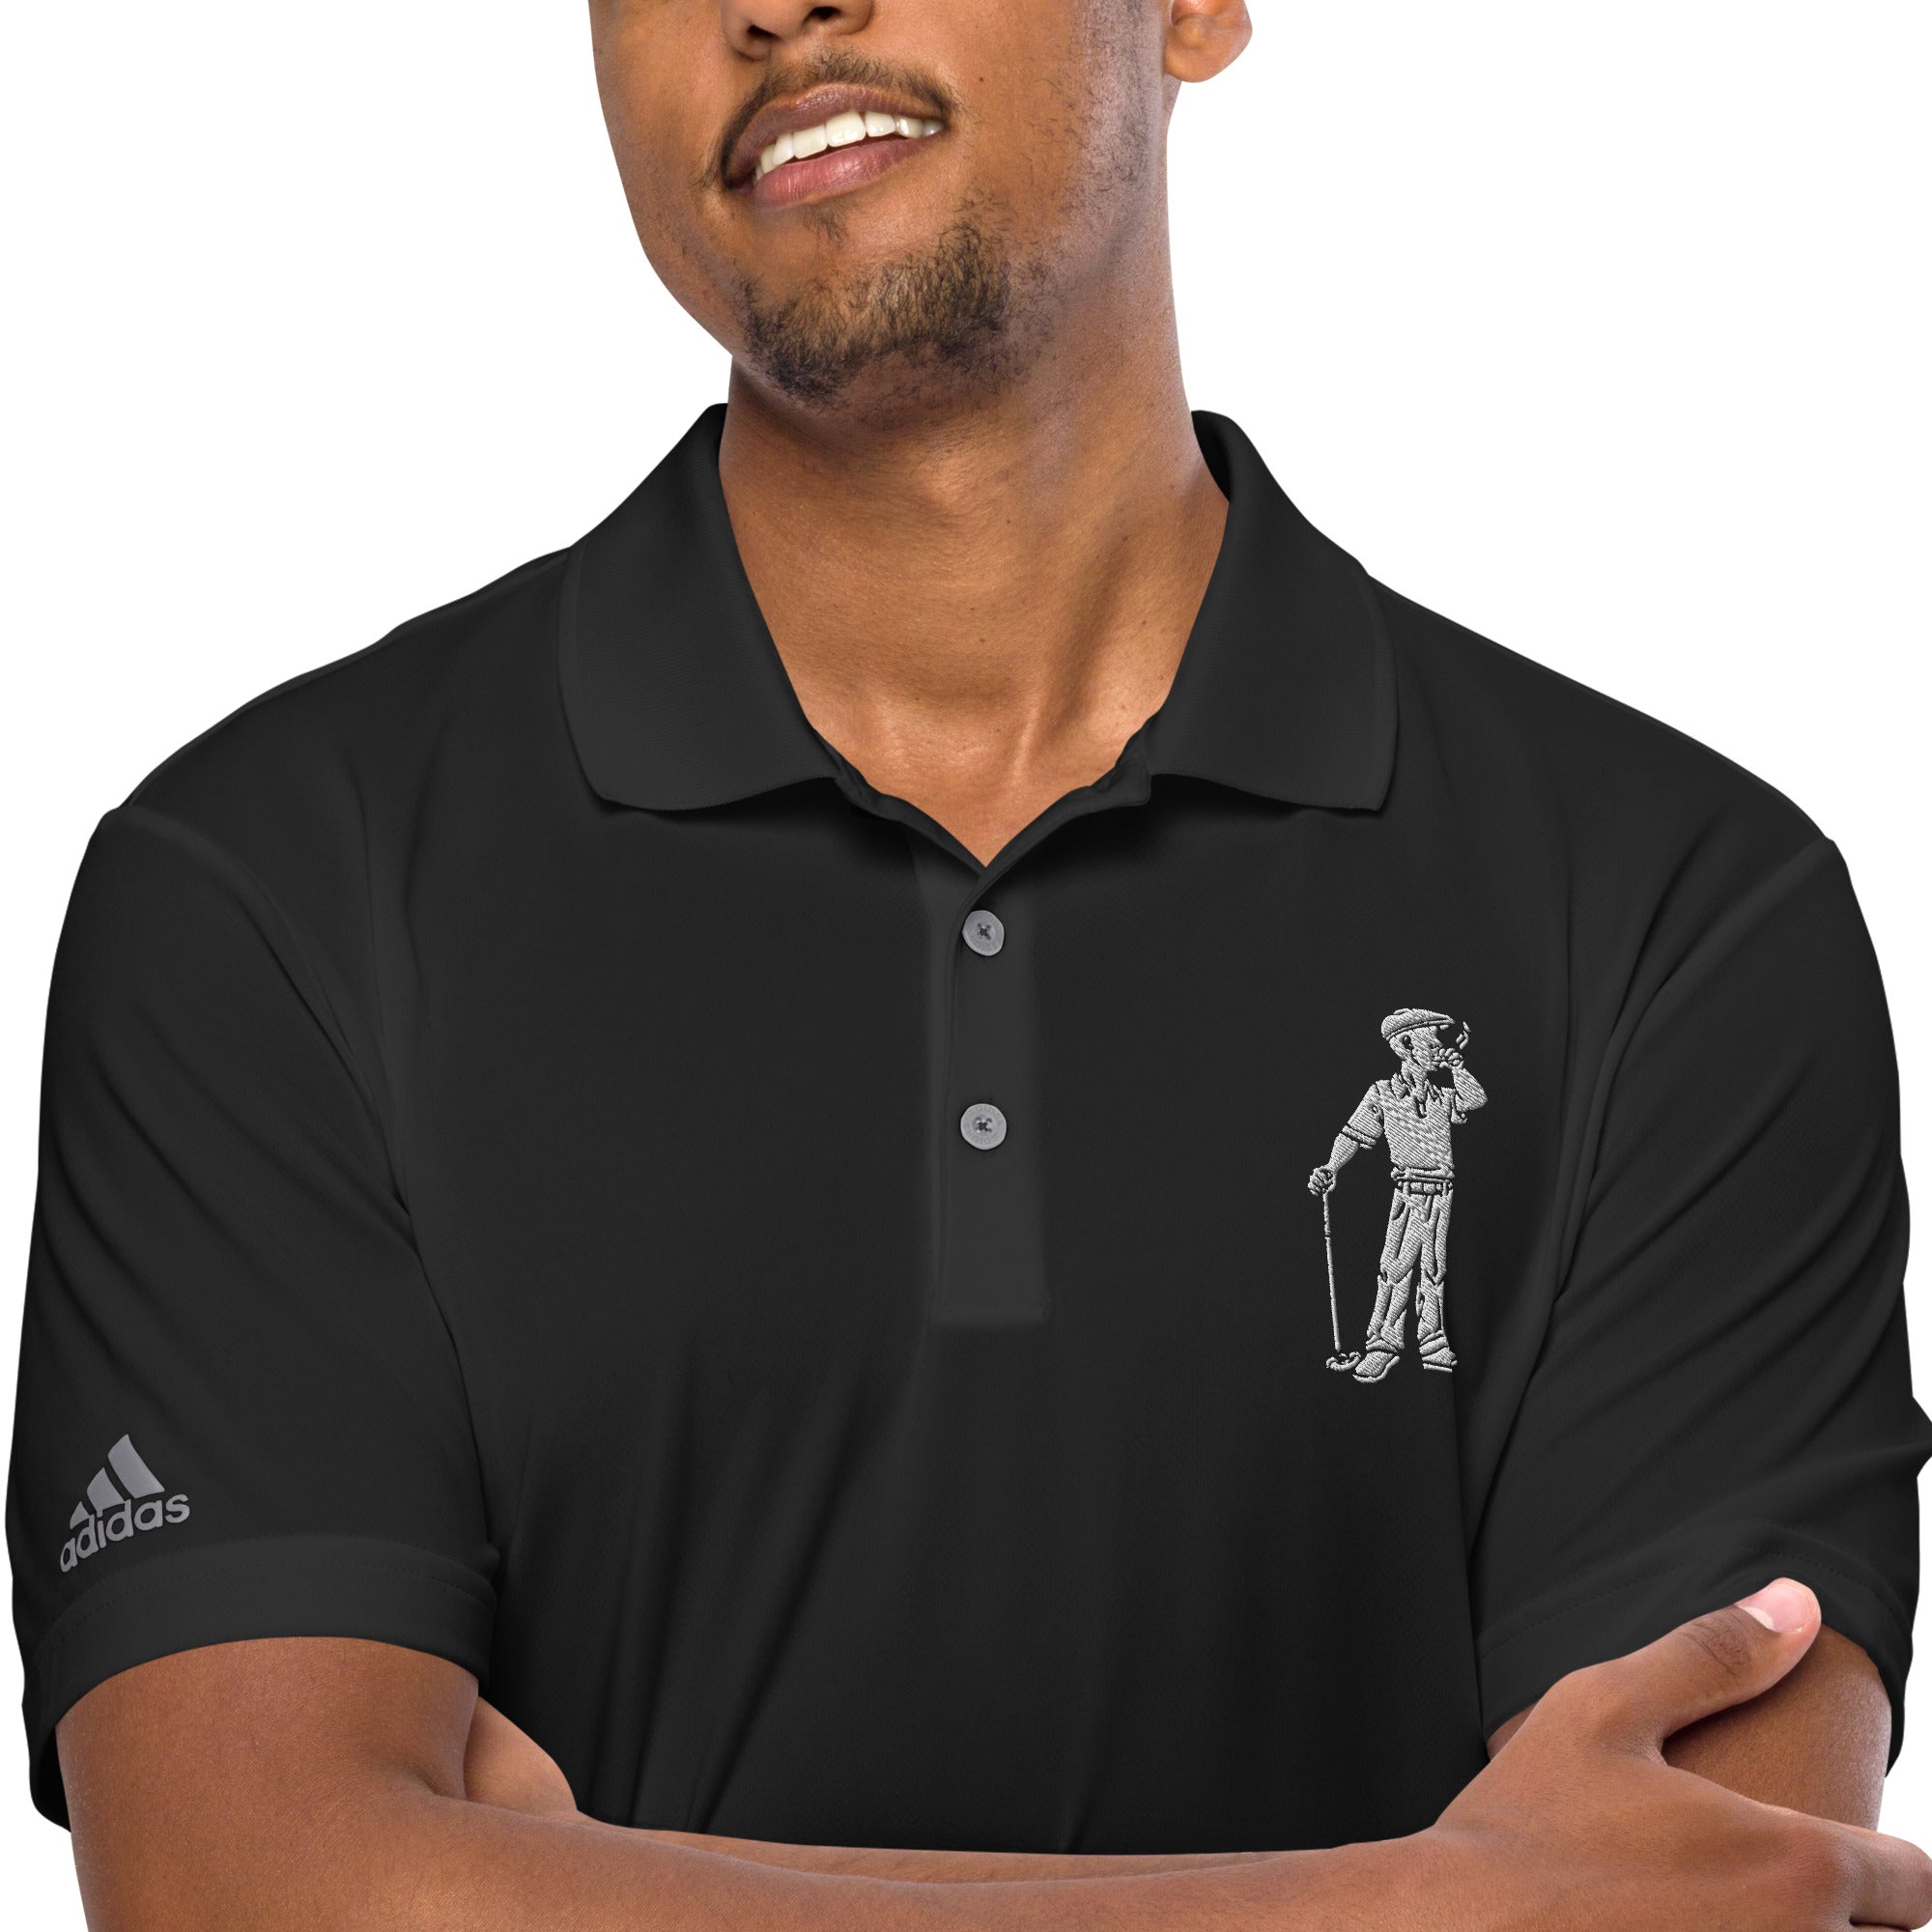 adidas Cigar Golfer performance polo shirt